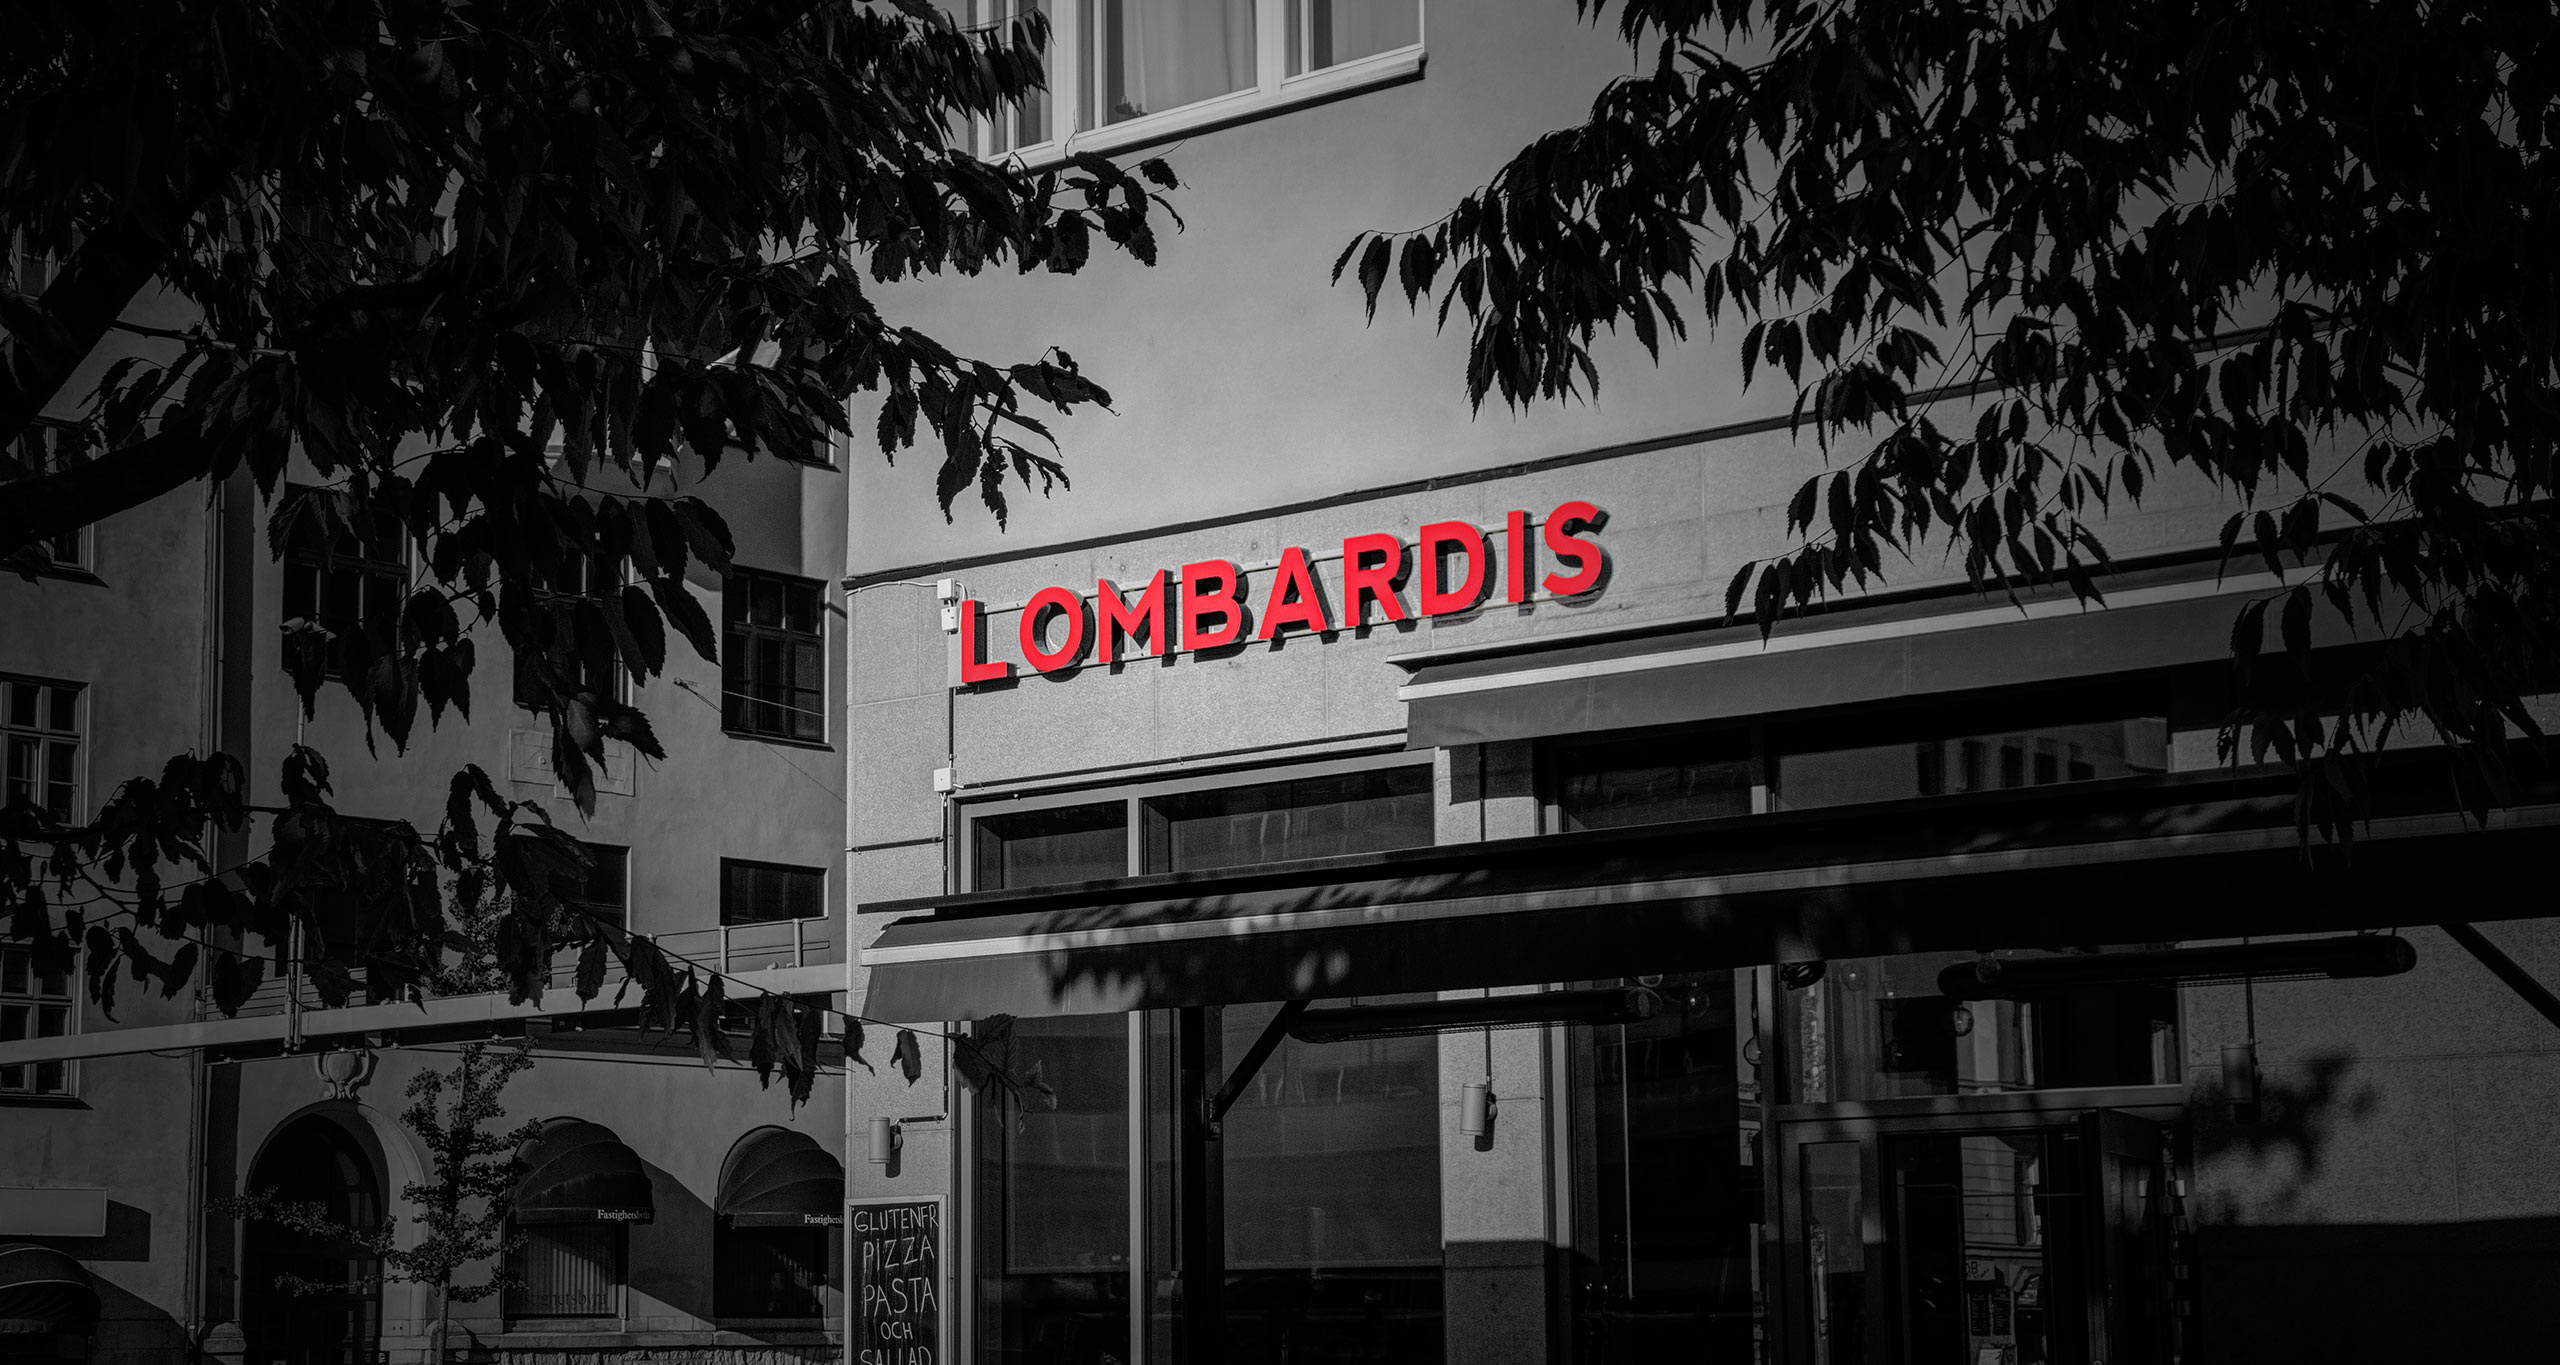 Lombardis logo